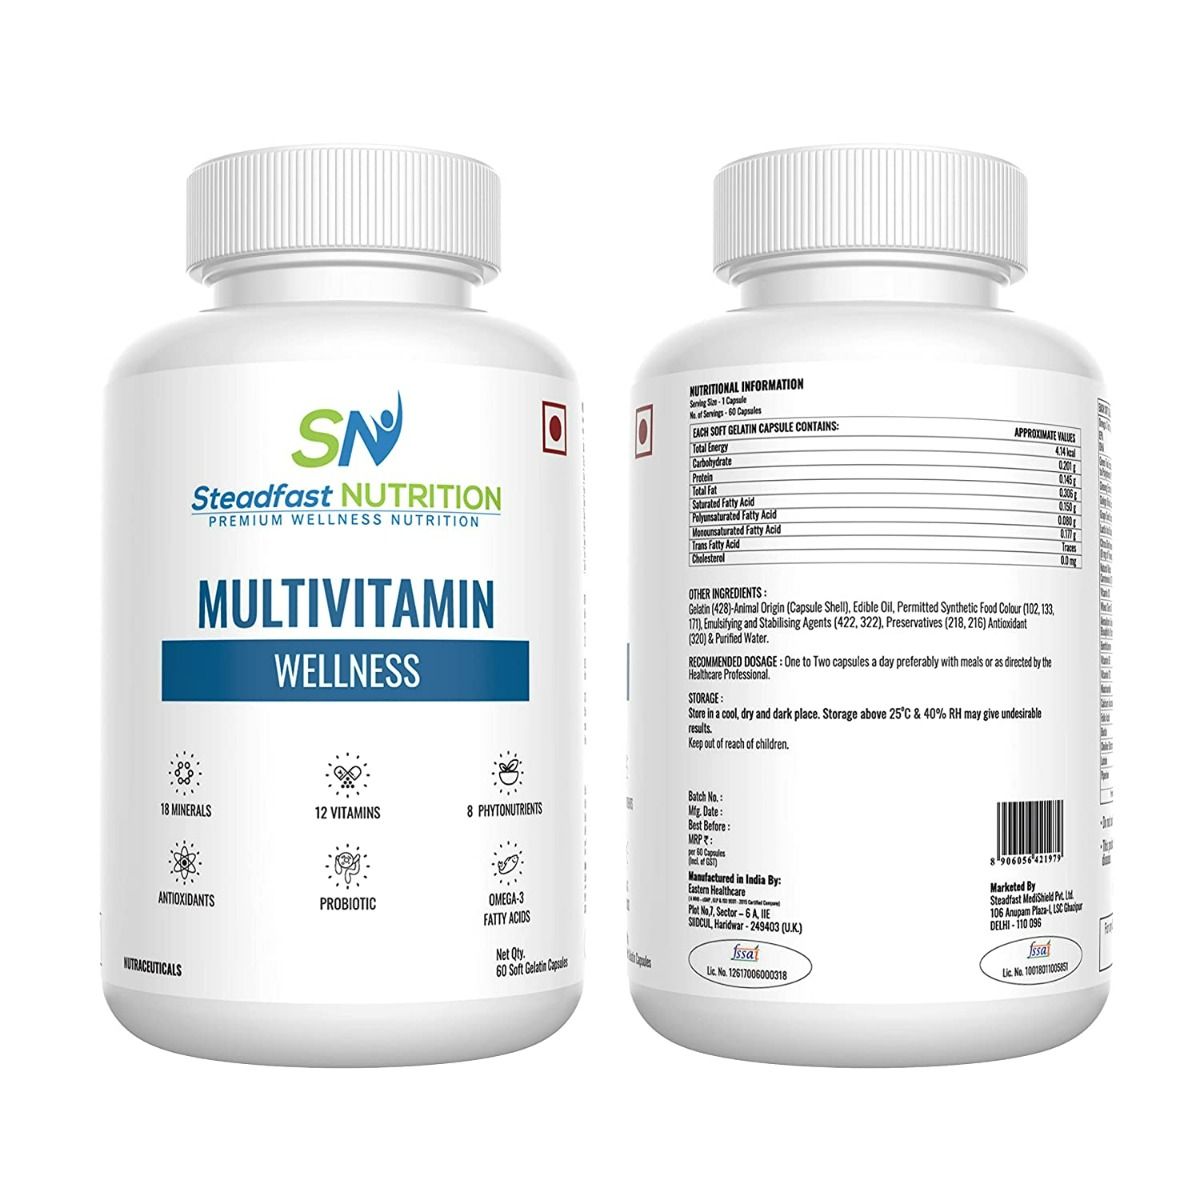 Steadfast Nutrition Multivitamin Wellness, 60 Soft Gelatin Capsules, Pack of 1 